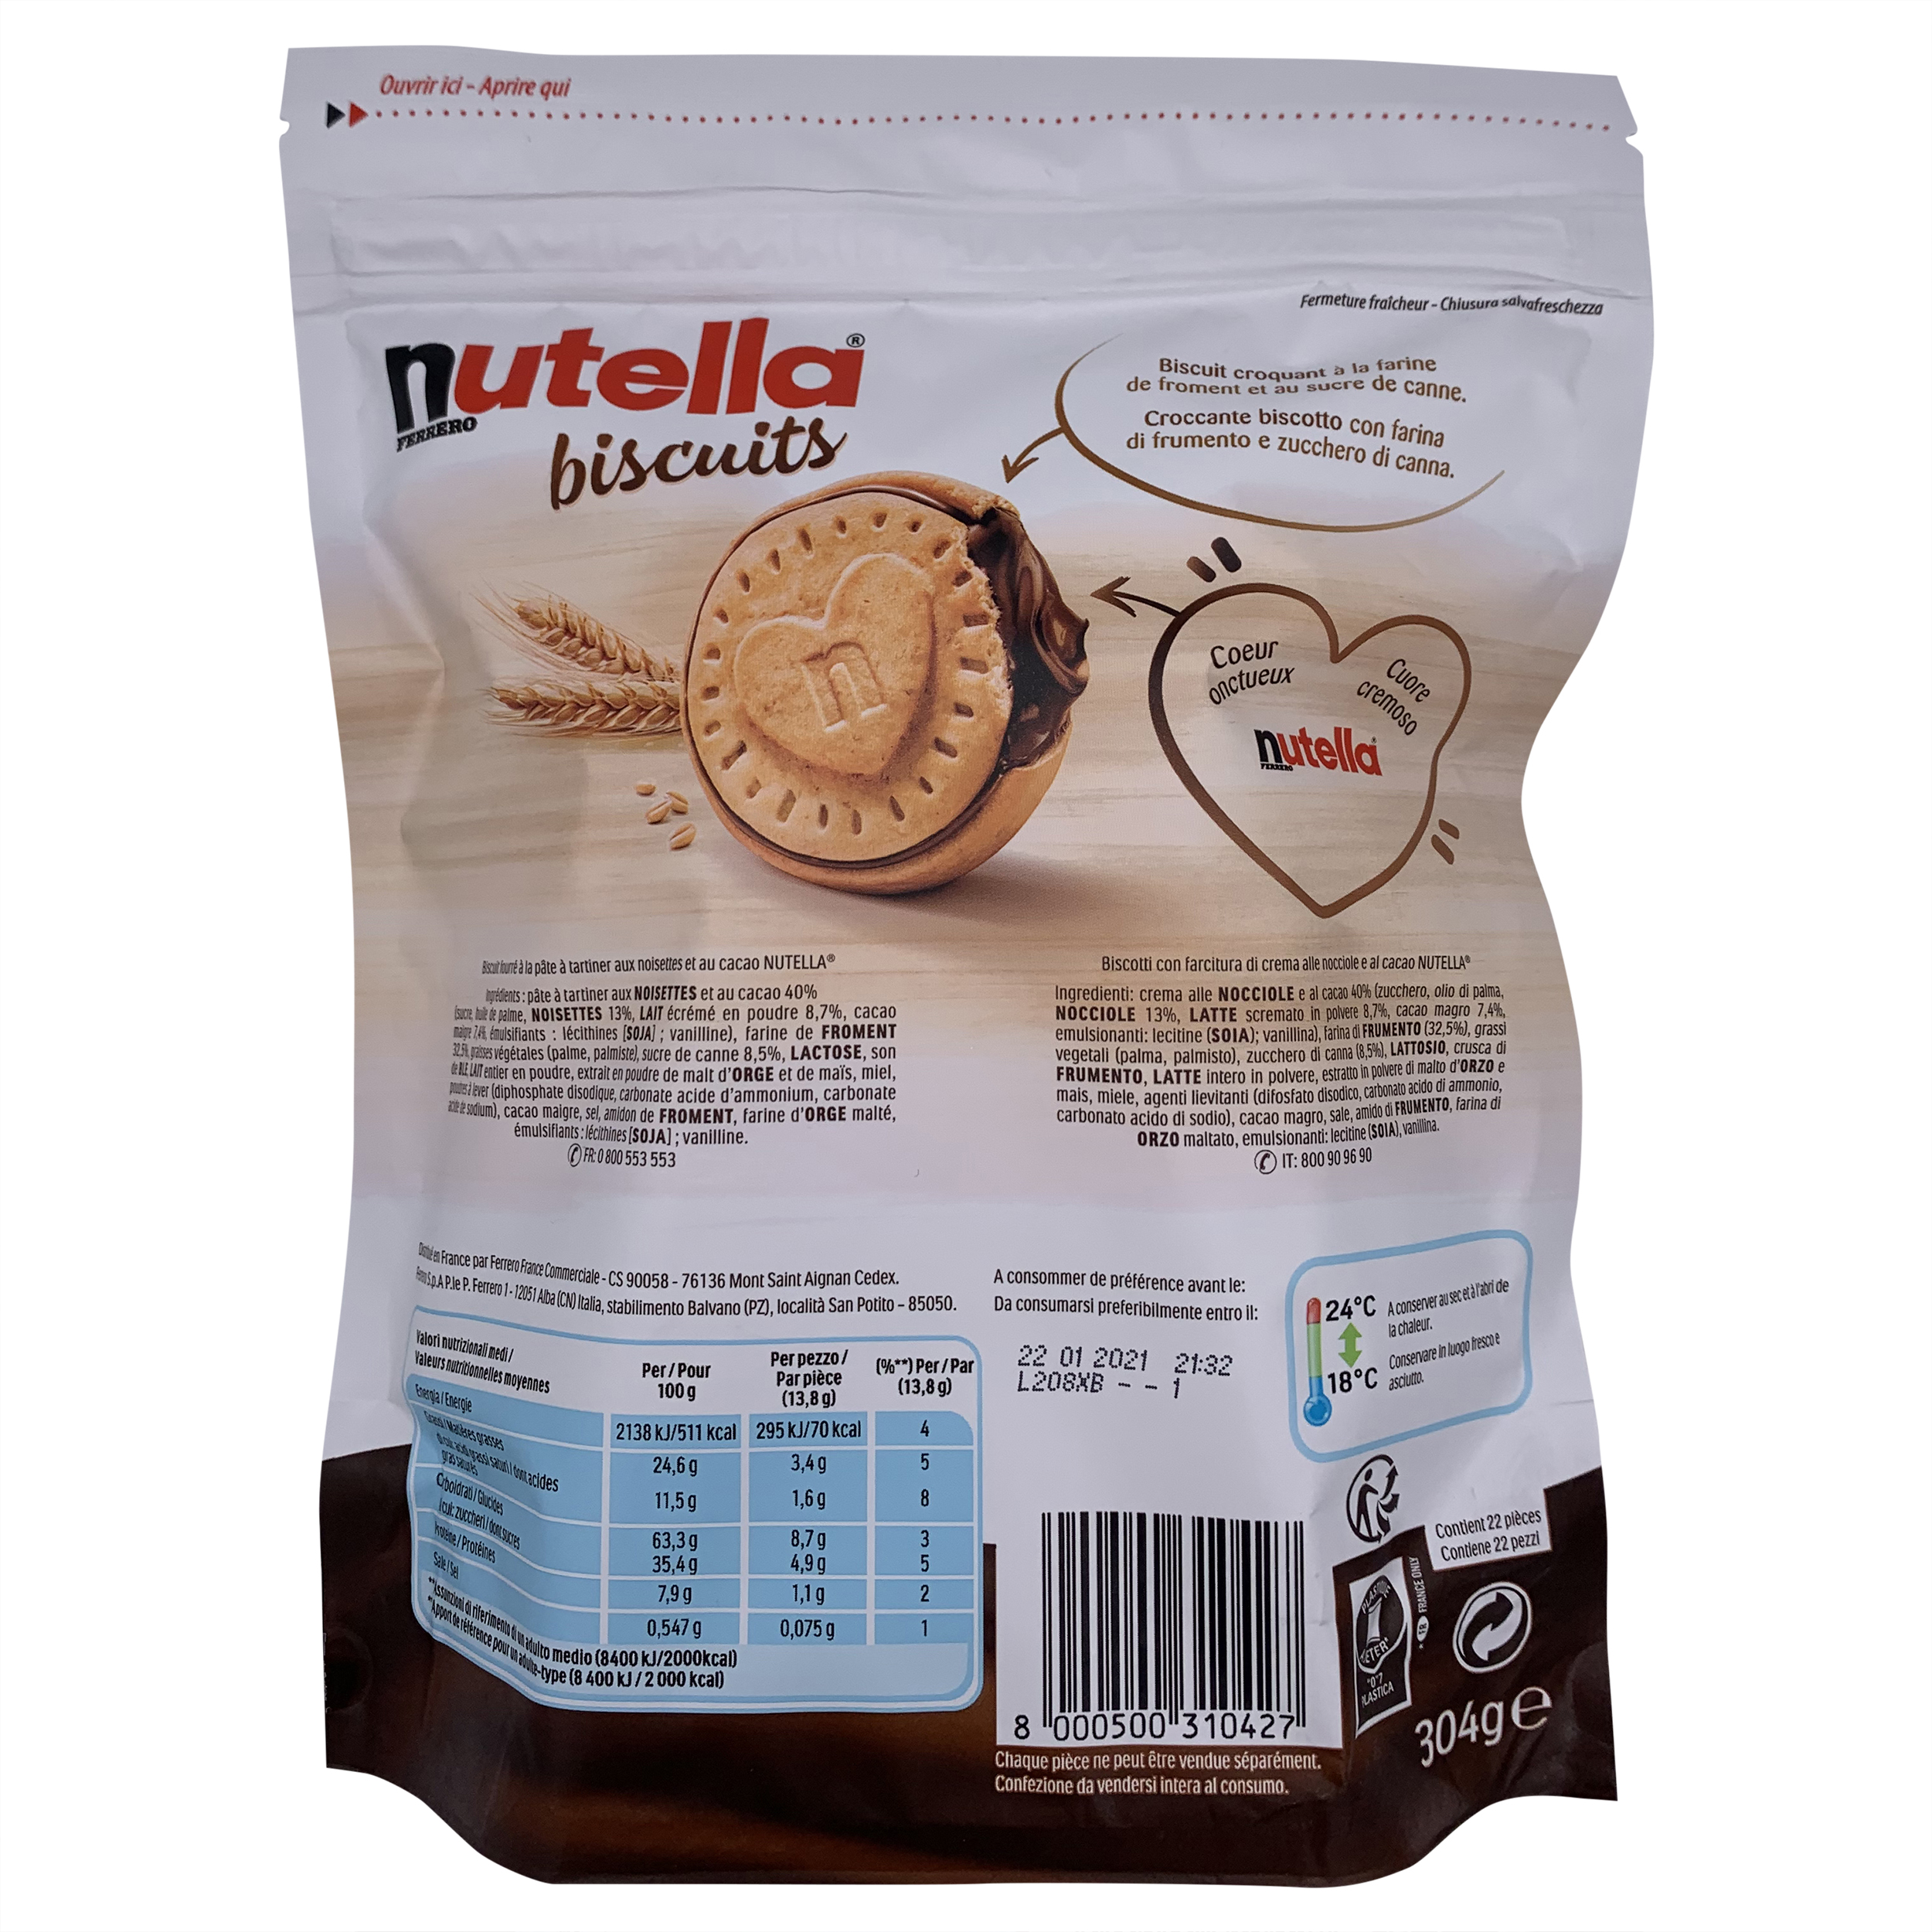 Nutella snack and drink (nutella, biscuits et thé glacé) : par portion